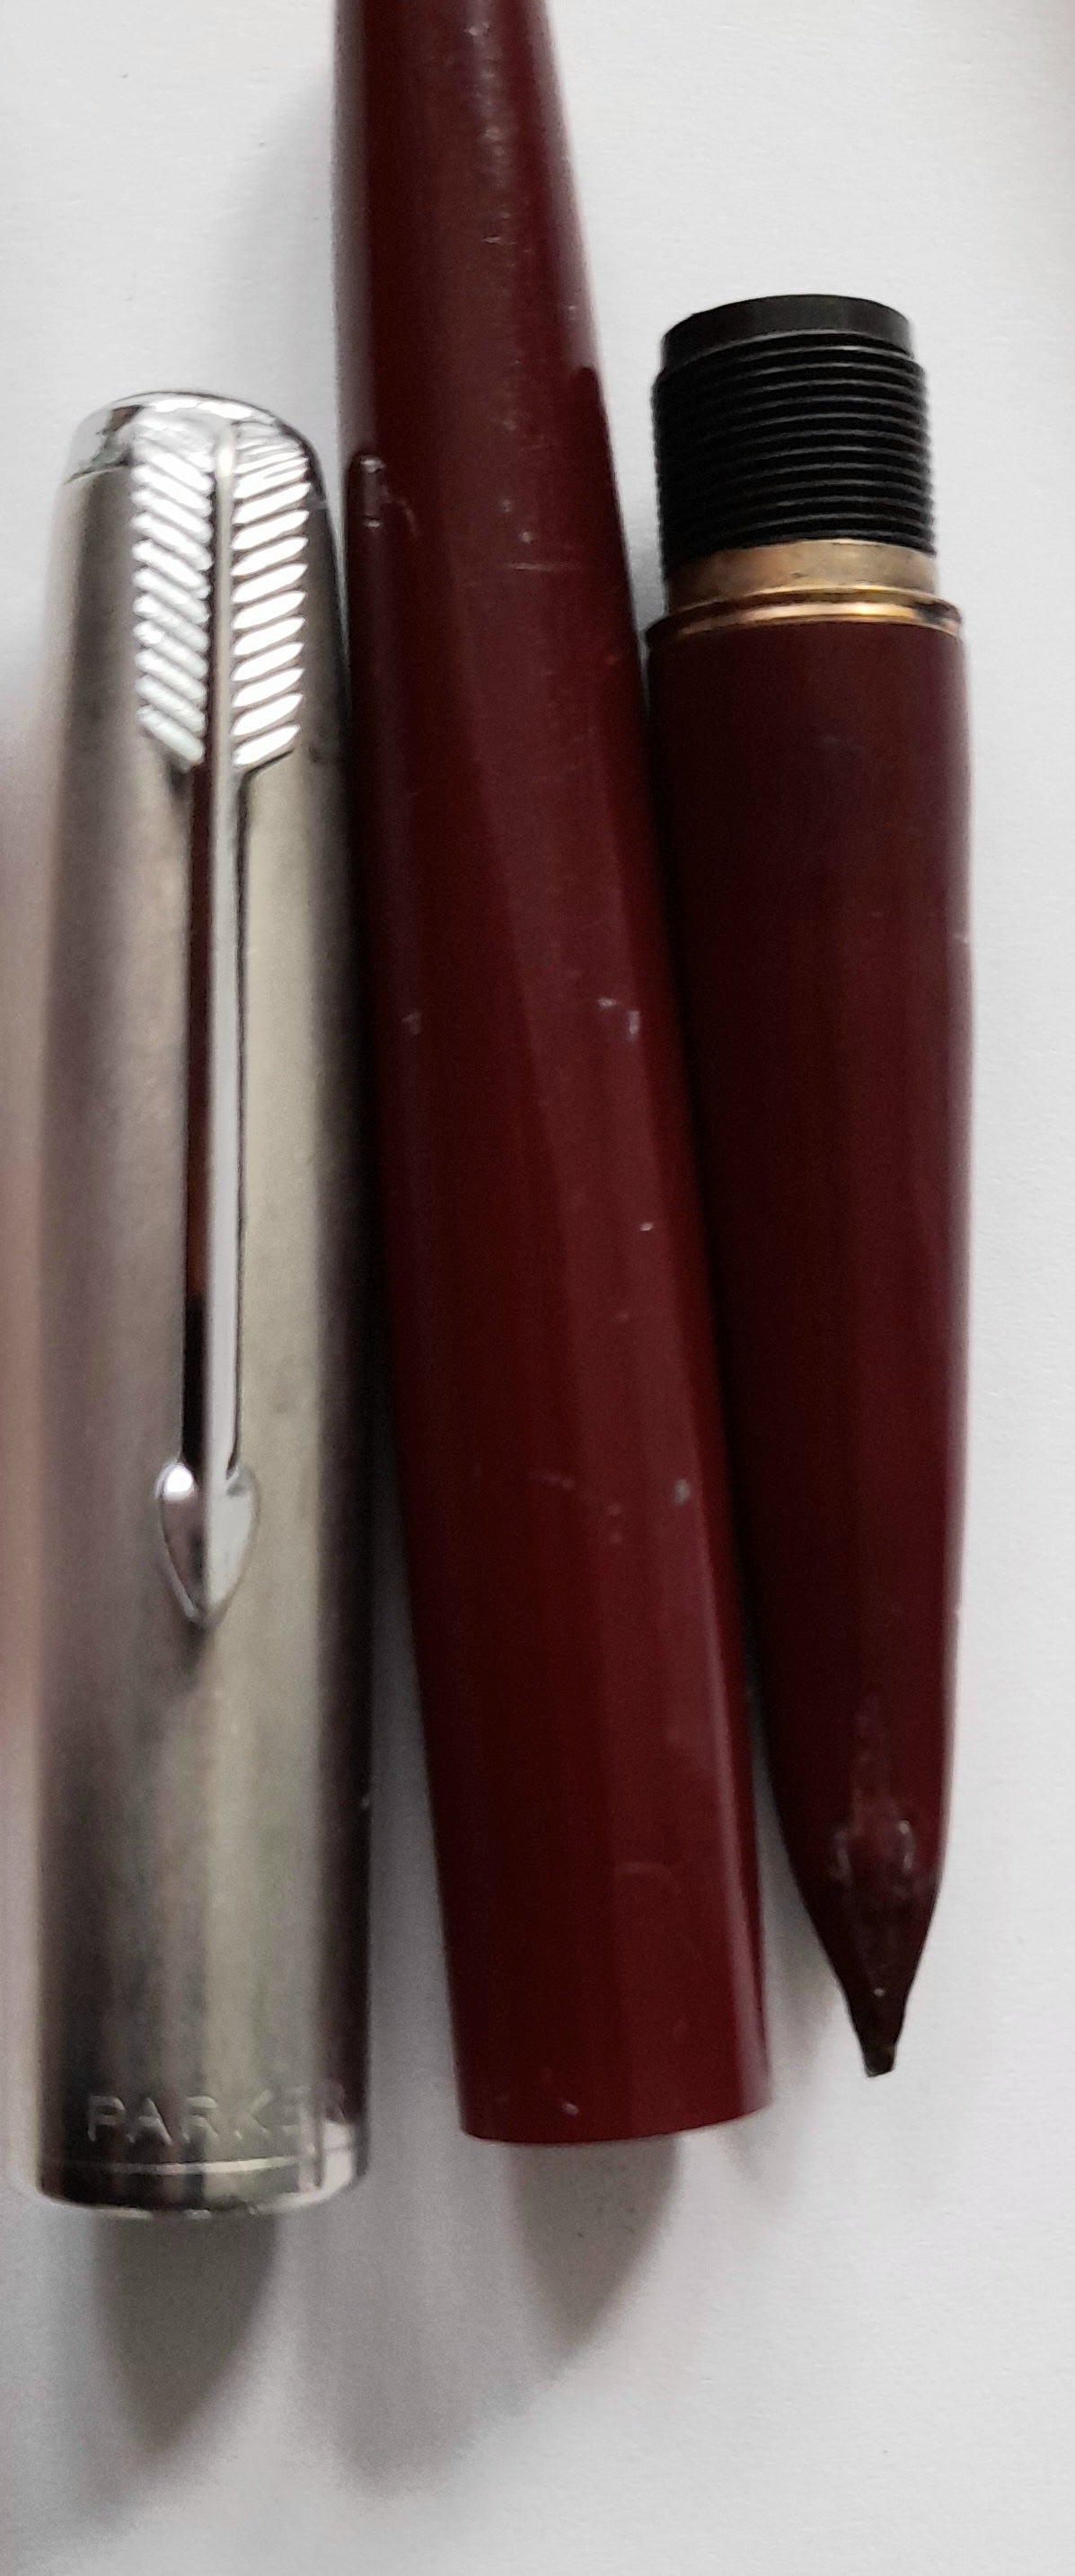 Parker 51 Silveralloy Cap and Crimson Body Fountain Pen.